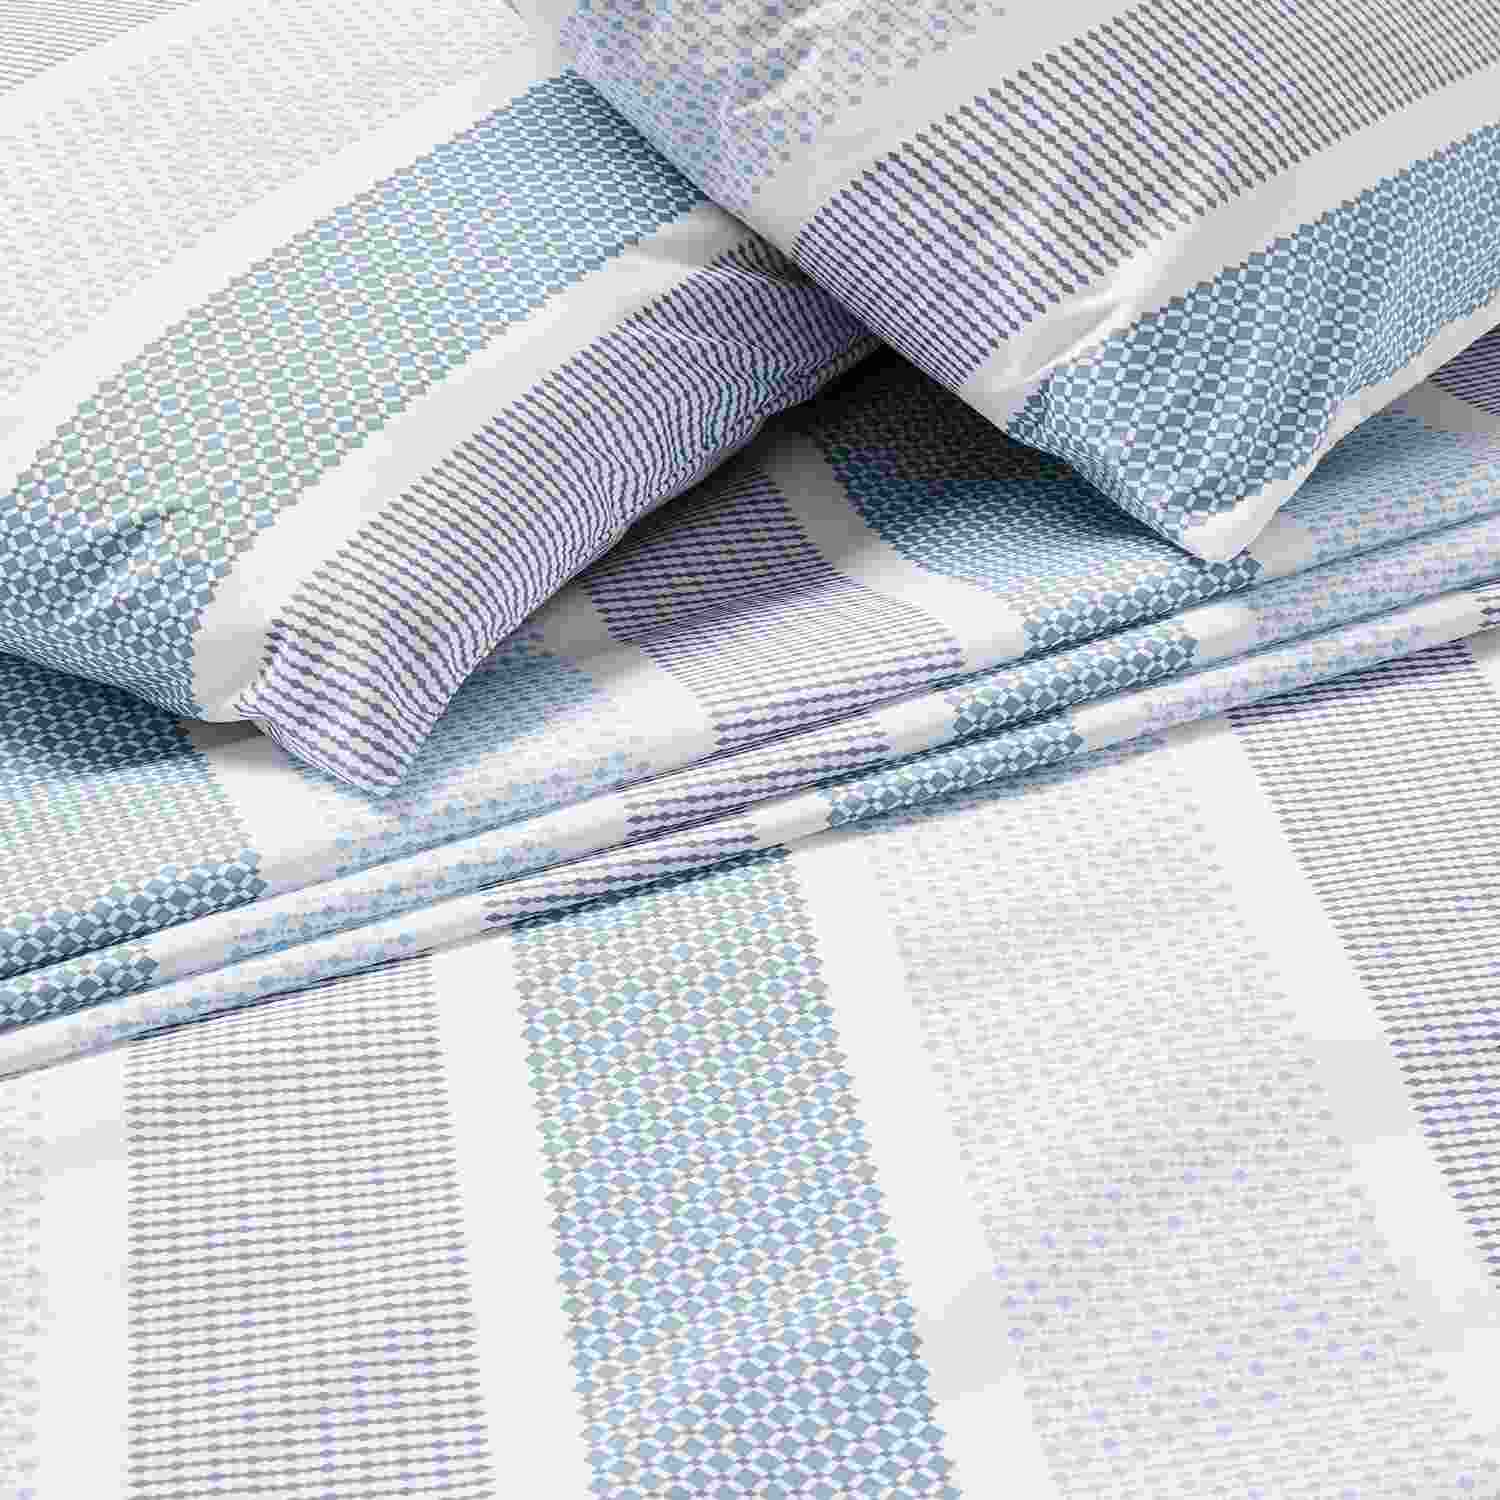 Rishahome 3-Piece Printed 180 Tc Cotton Bedsheet Set Queen Size, Premium Collection (1 Bedsheet + 2 Pillow Cases) Gray Suit